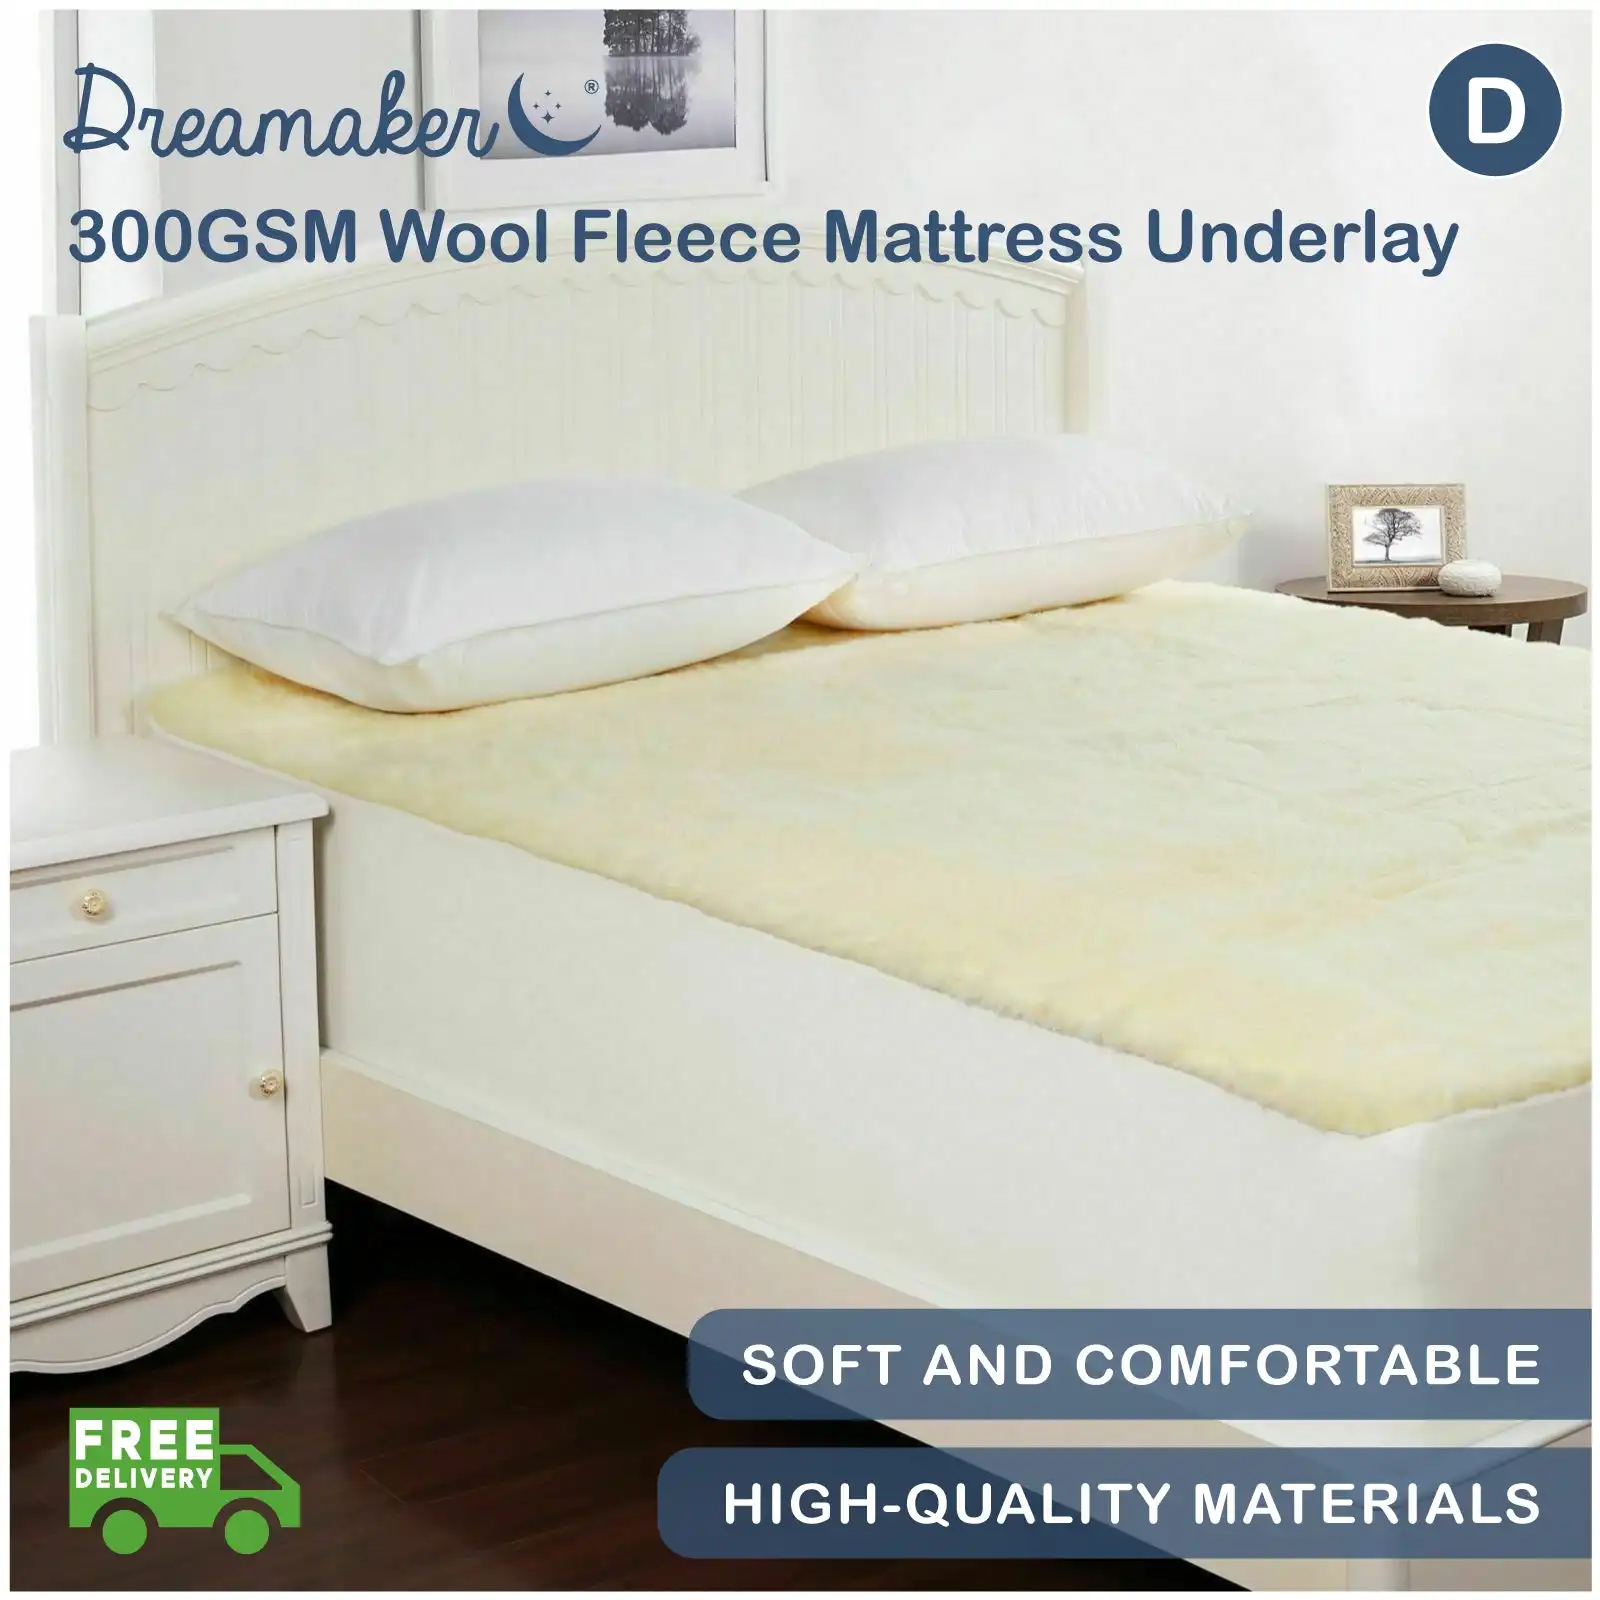 Dreamaker 300GSM Wool Fleece Mattress Underlay - Double Bed